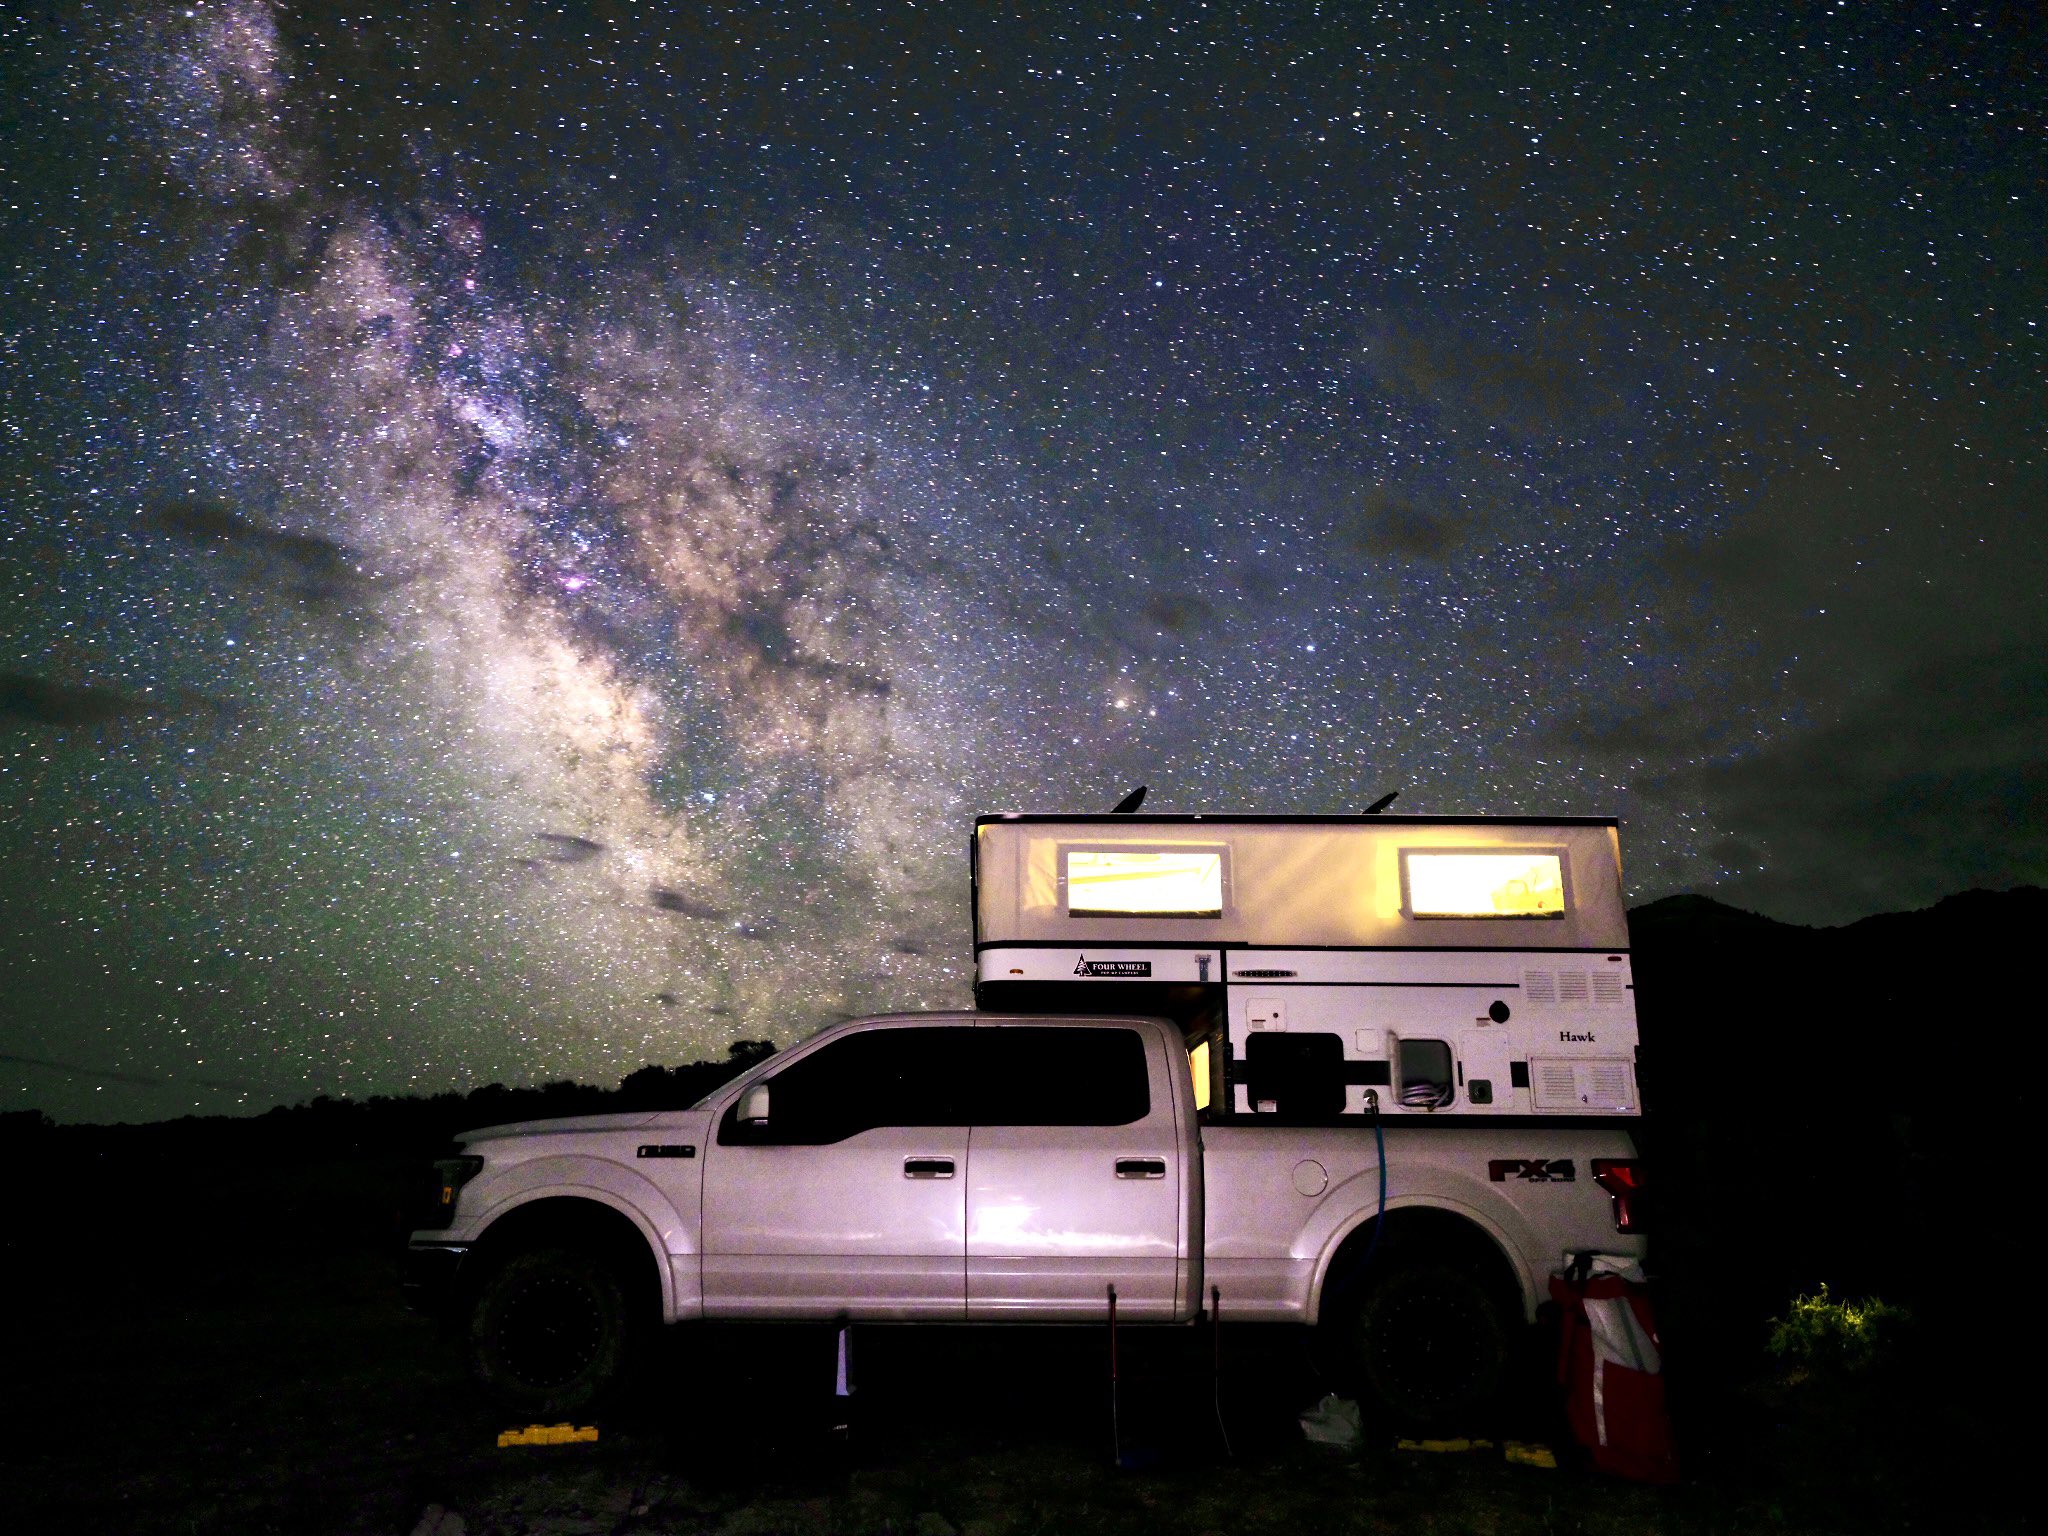 Stuart Palley's Truck Camper Under the Milky Way